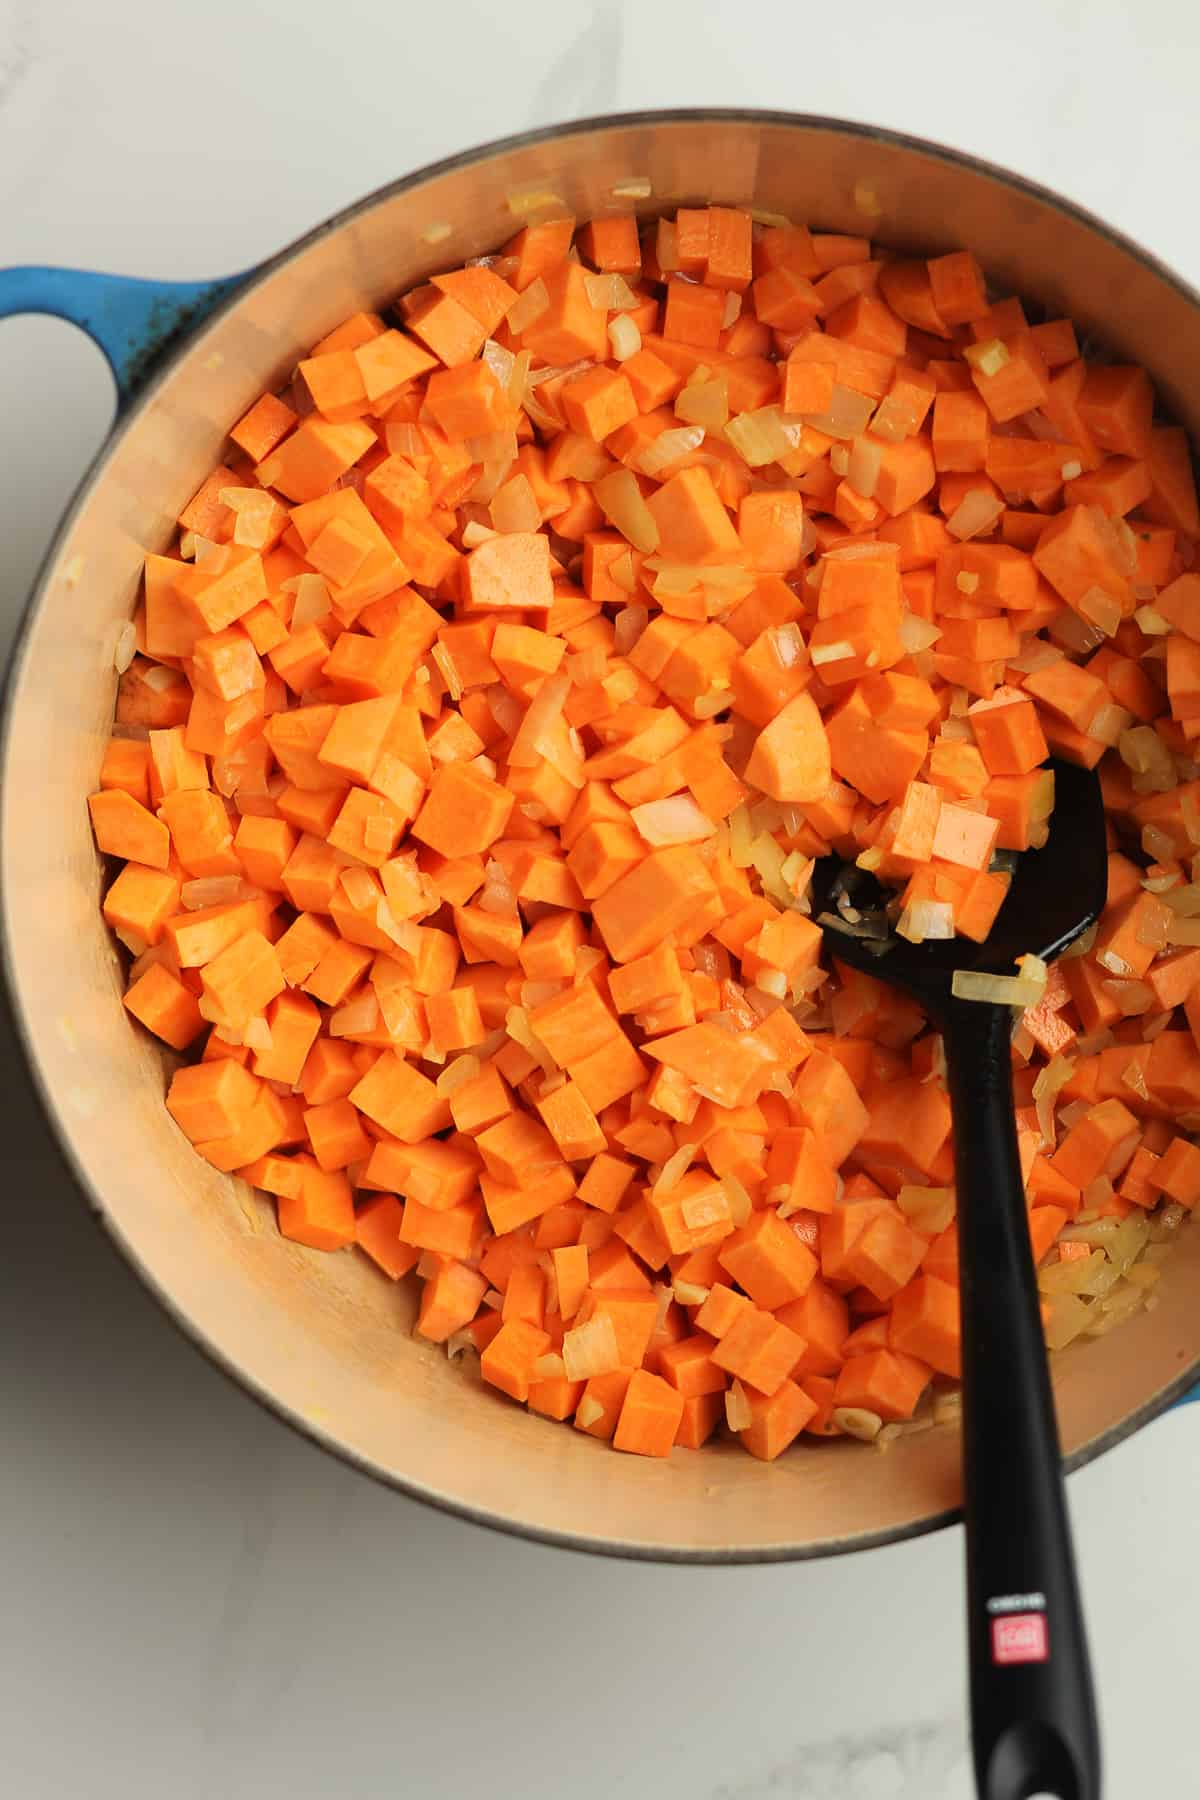 The stock pot of sweet potatoes.